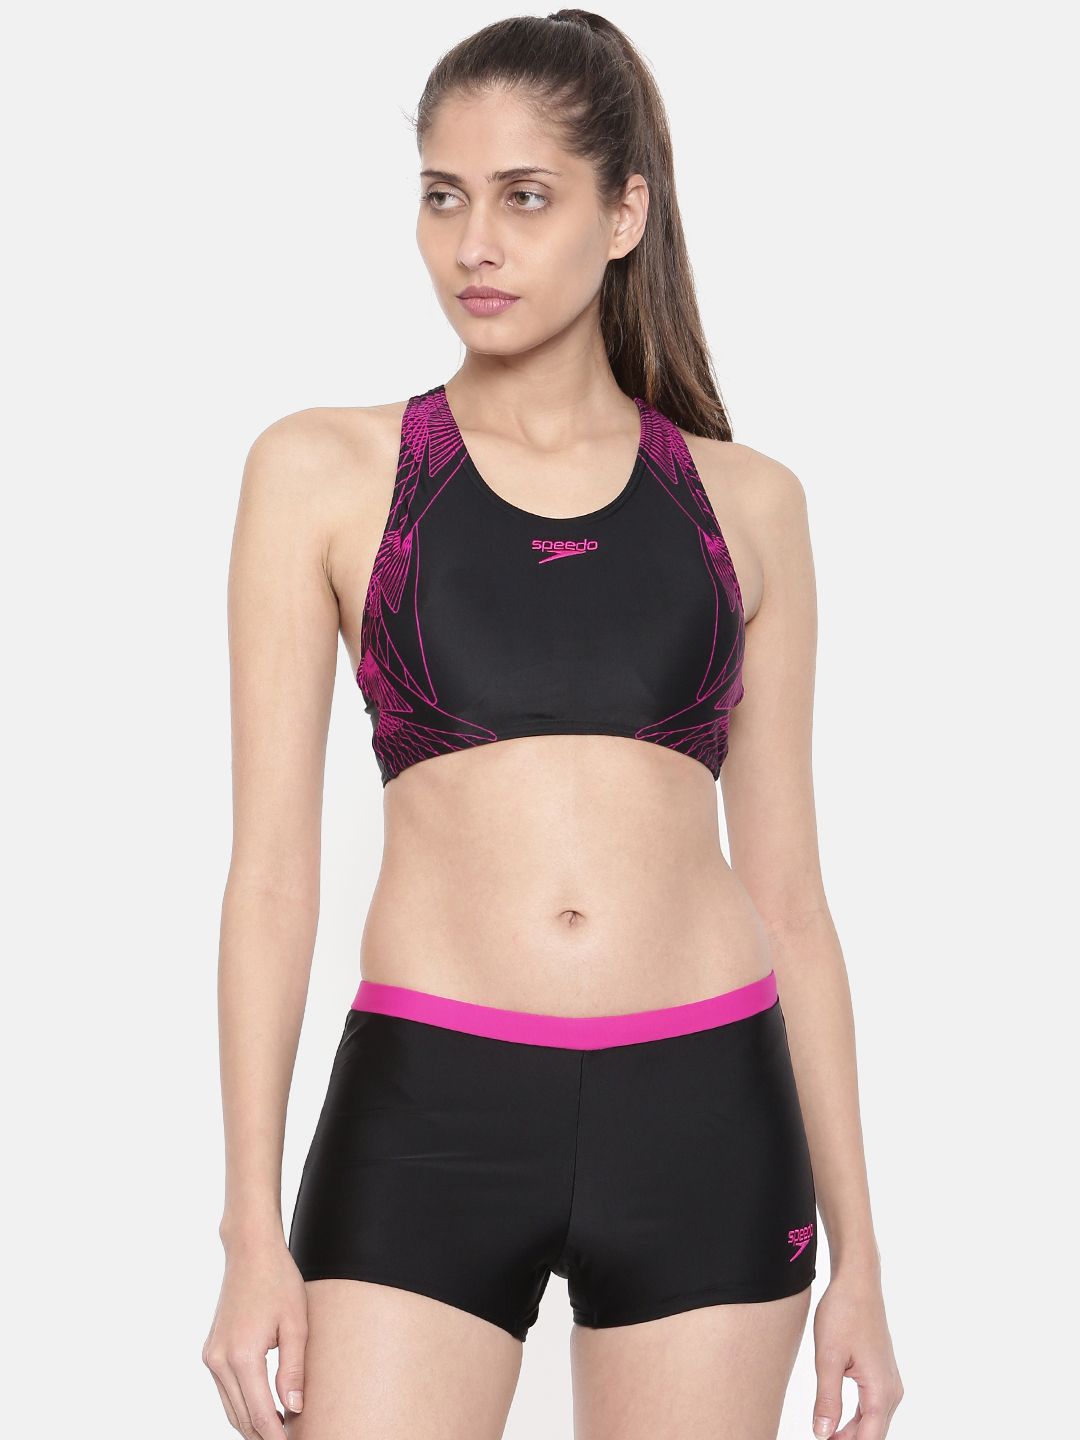 Speedo Women Black & Pink Printed Swim Set 8FS370B344 Price in India